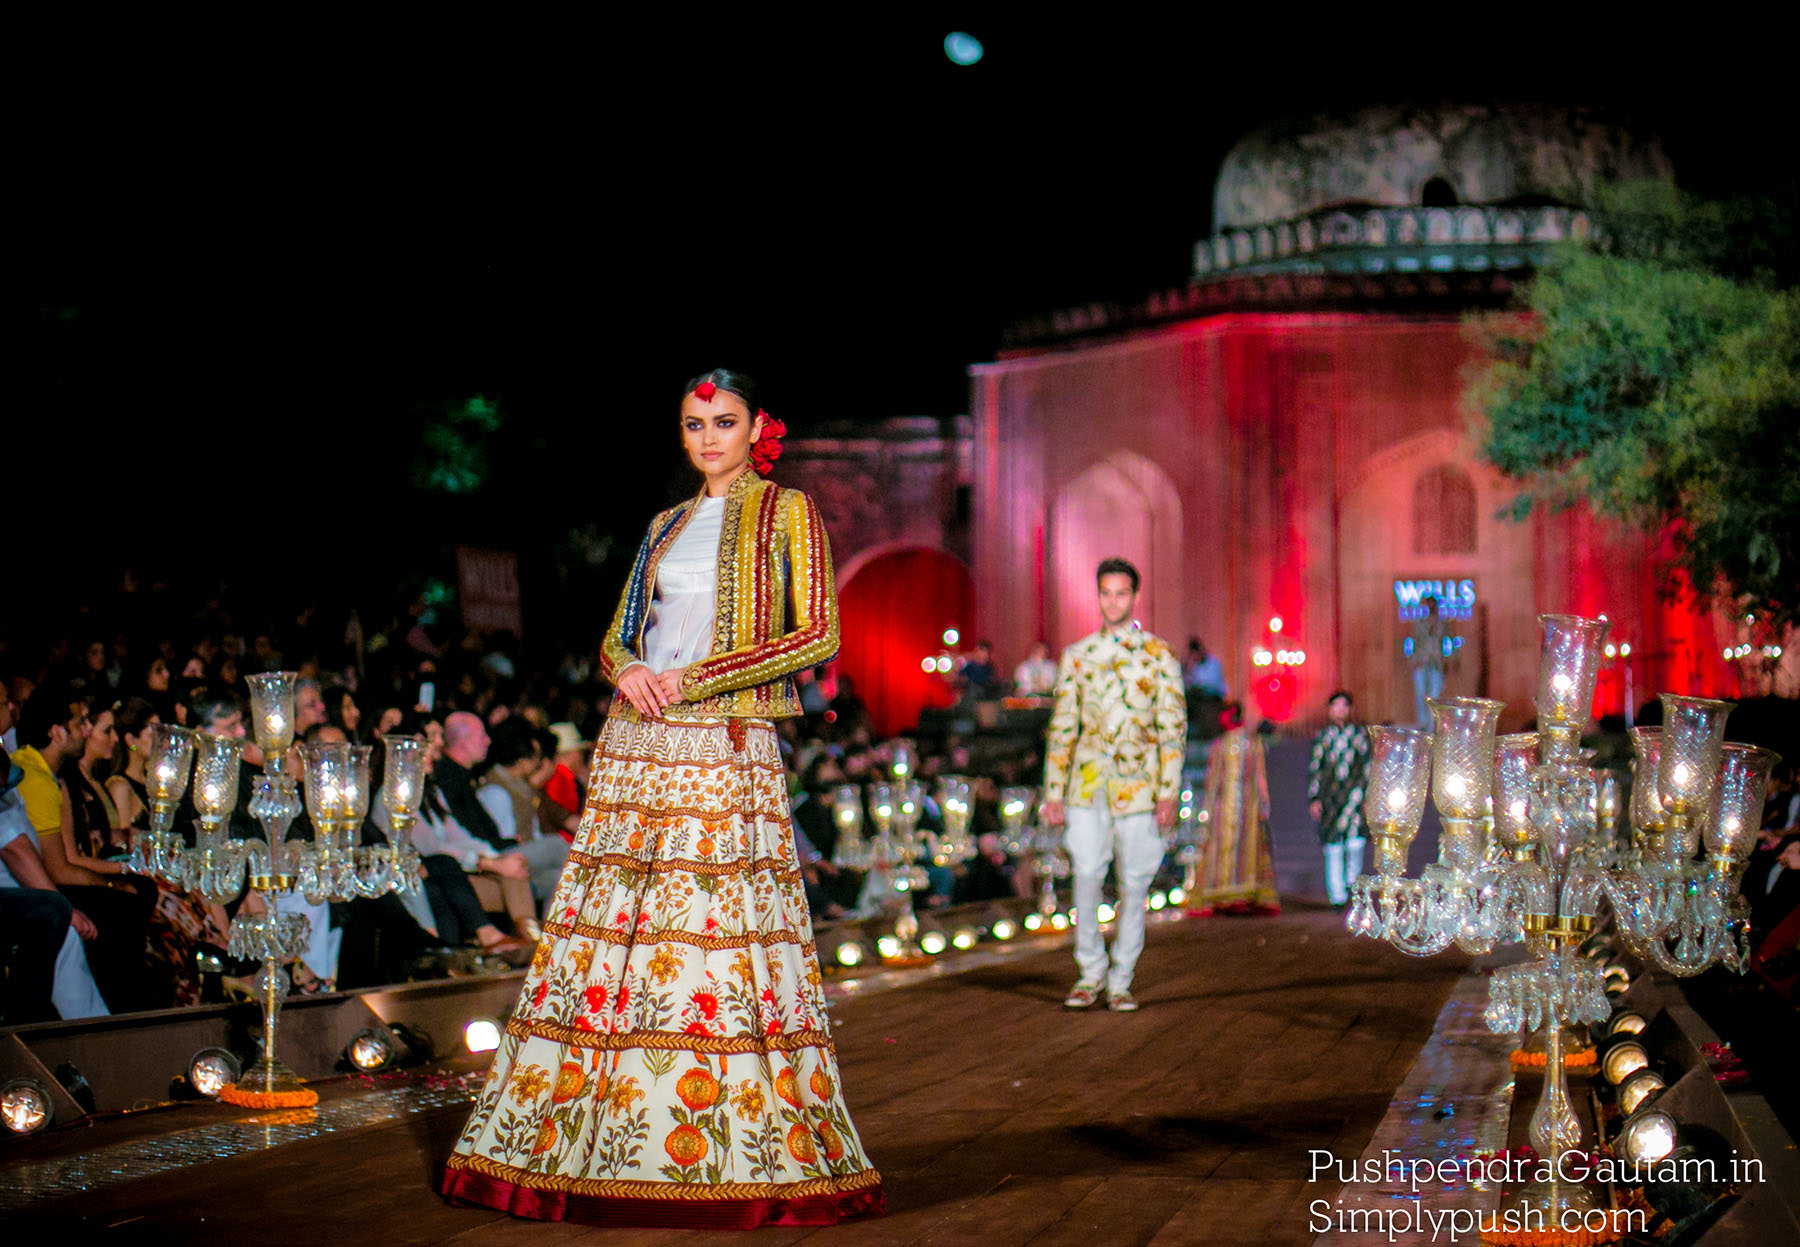 Rohit-bal-grand-finale-wifwss15-quli-khan-tomb-mehrauli-kutub-minar-show-at-wills-lifestyle-india-fashion-week-ss15-Rohit-bal-fashion-show-india-at-wills-india-fashion-week-pushpendragautam-pics-event-photographer-india